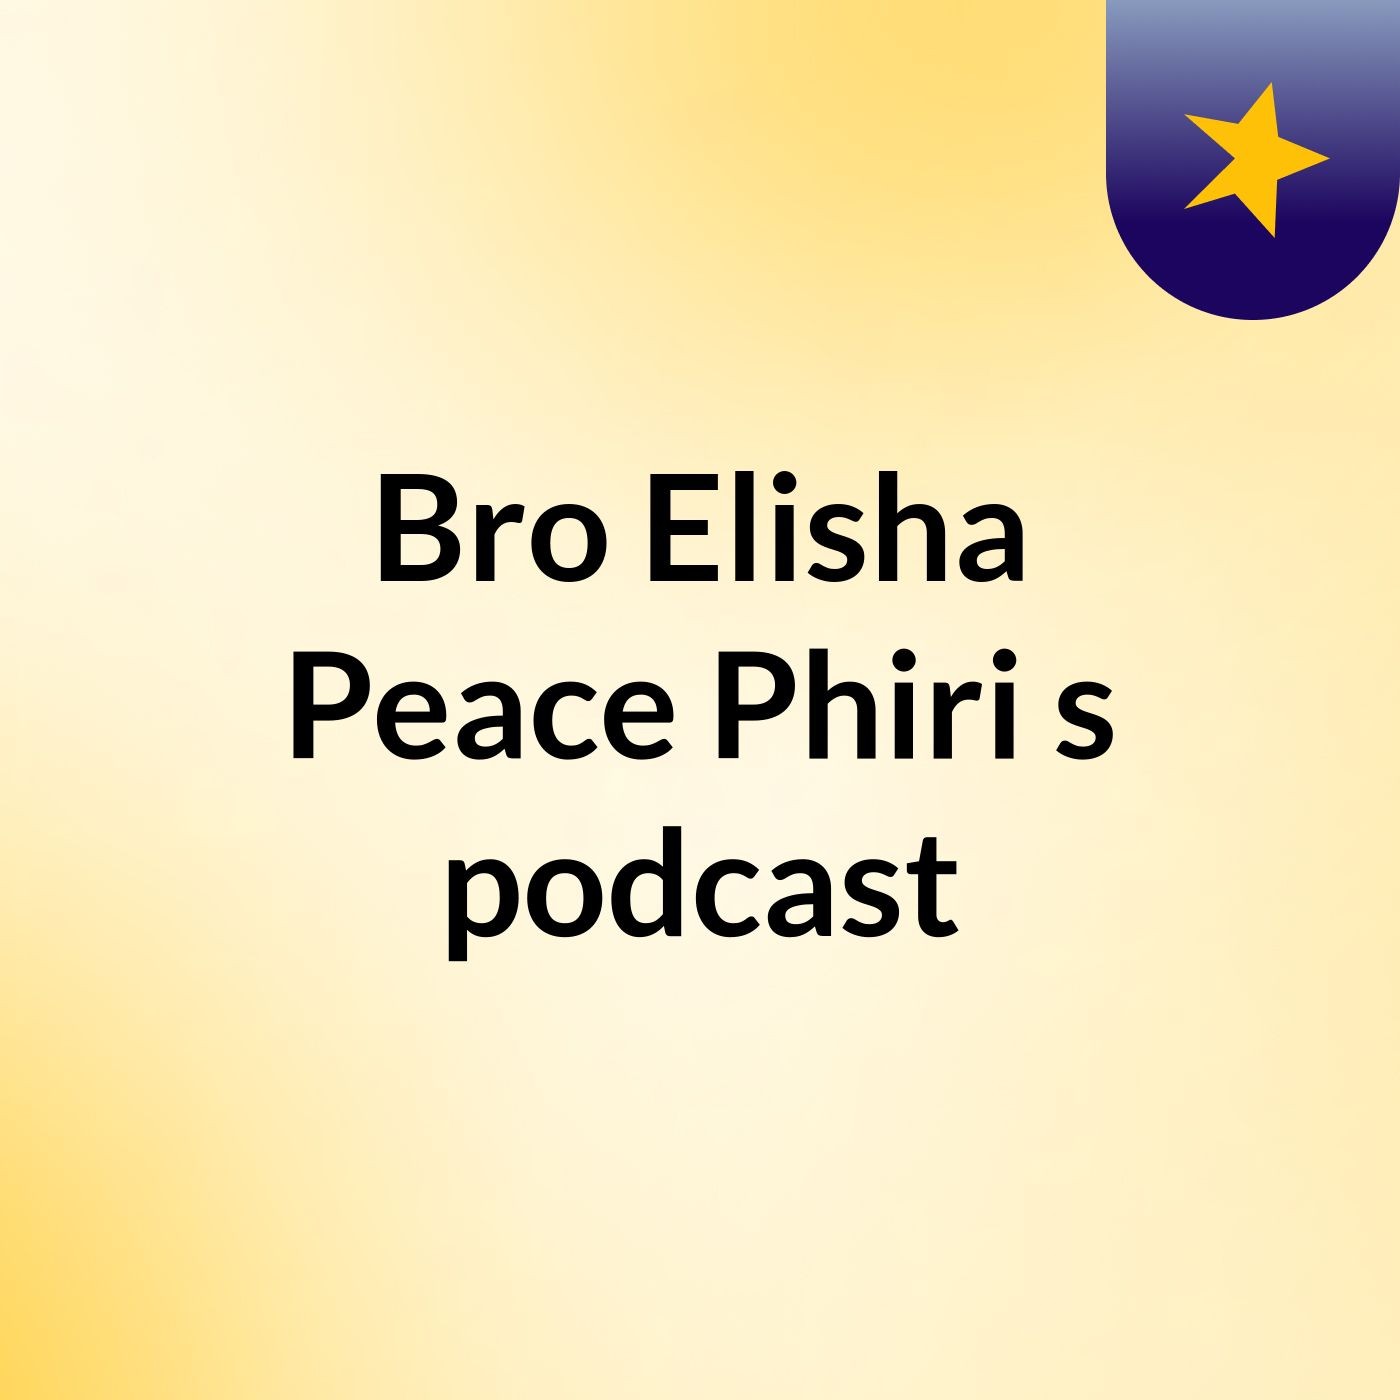 Bro Elisha Peace Phiri's podcast